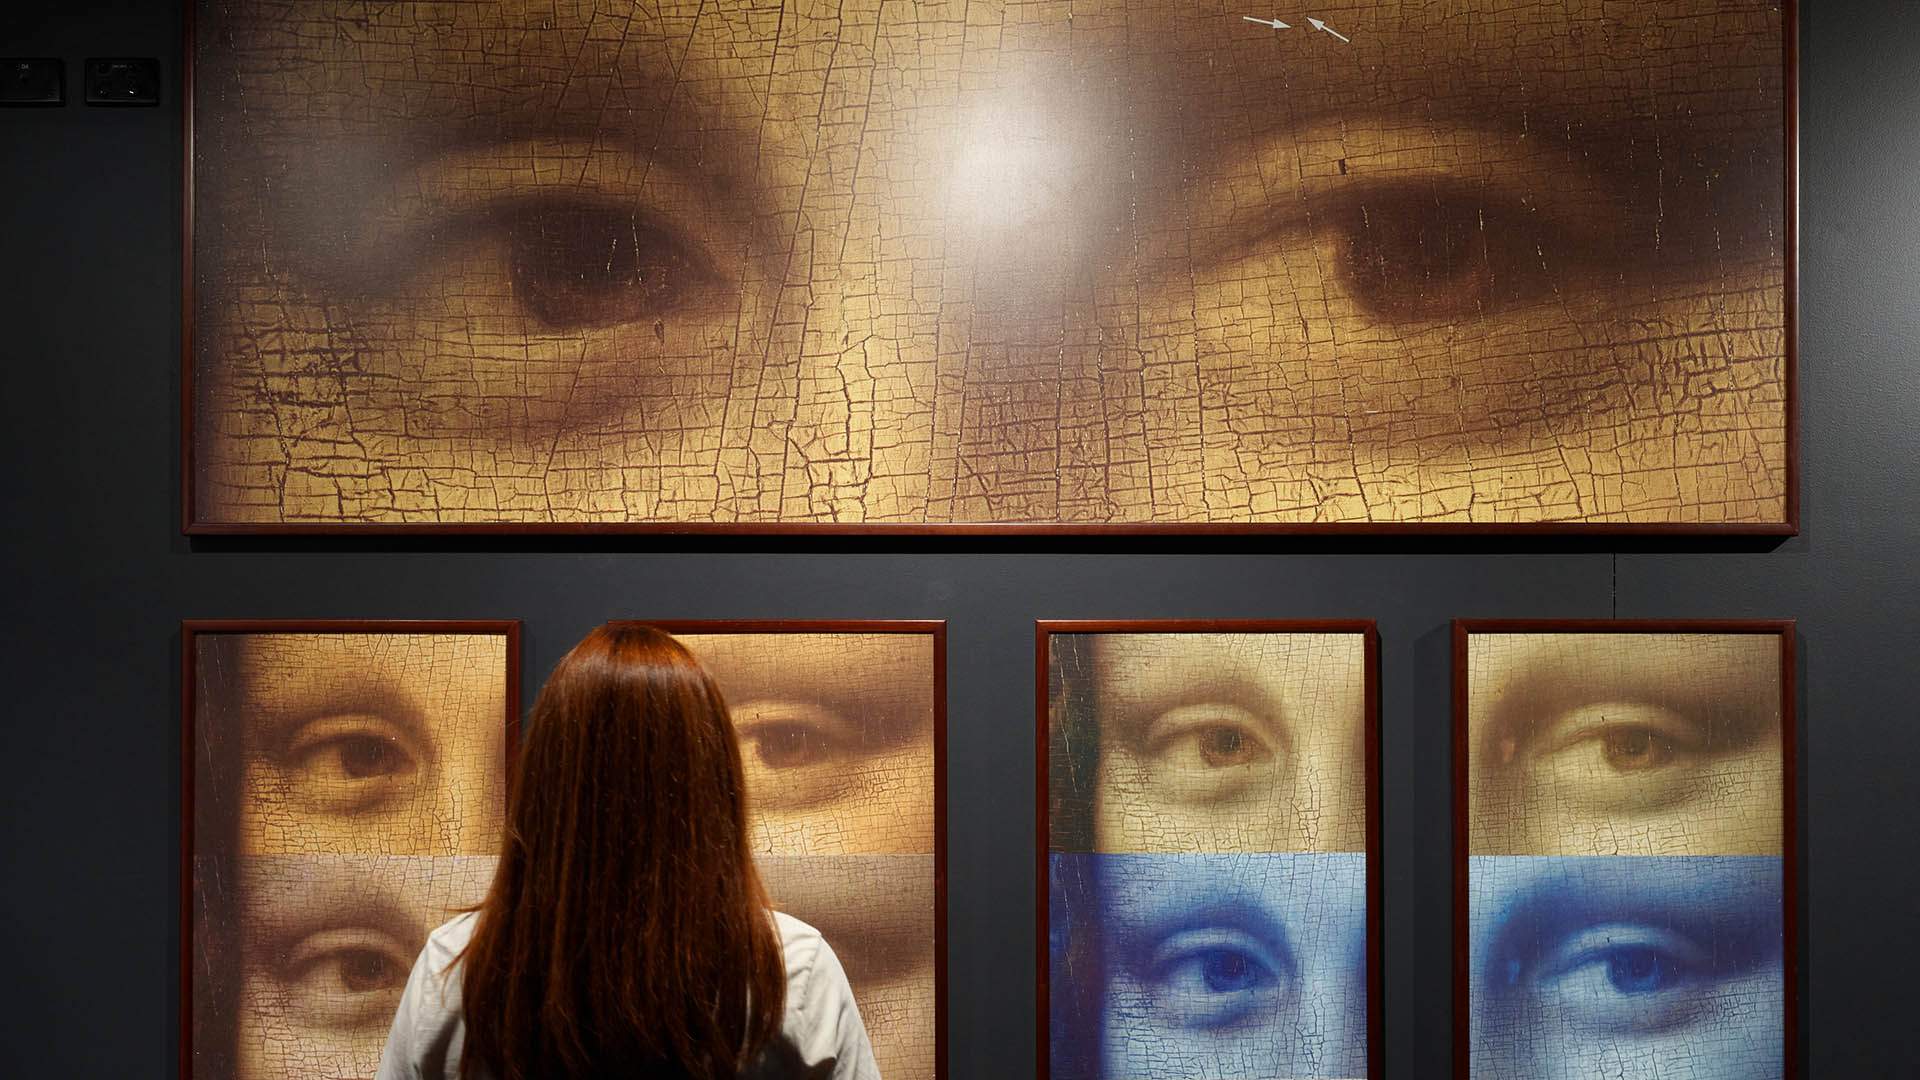 From the 'Mona Lisa' to 'Codex Atlanticus': A Look Inside The Lume's Multi-Sensory Leonardo da Vinci Exhibition